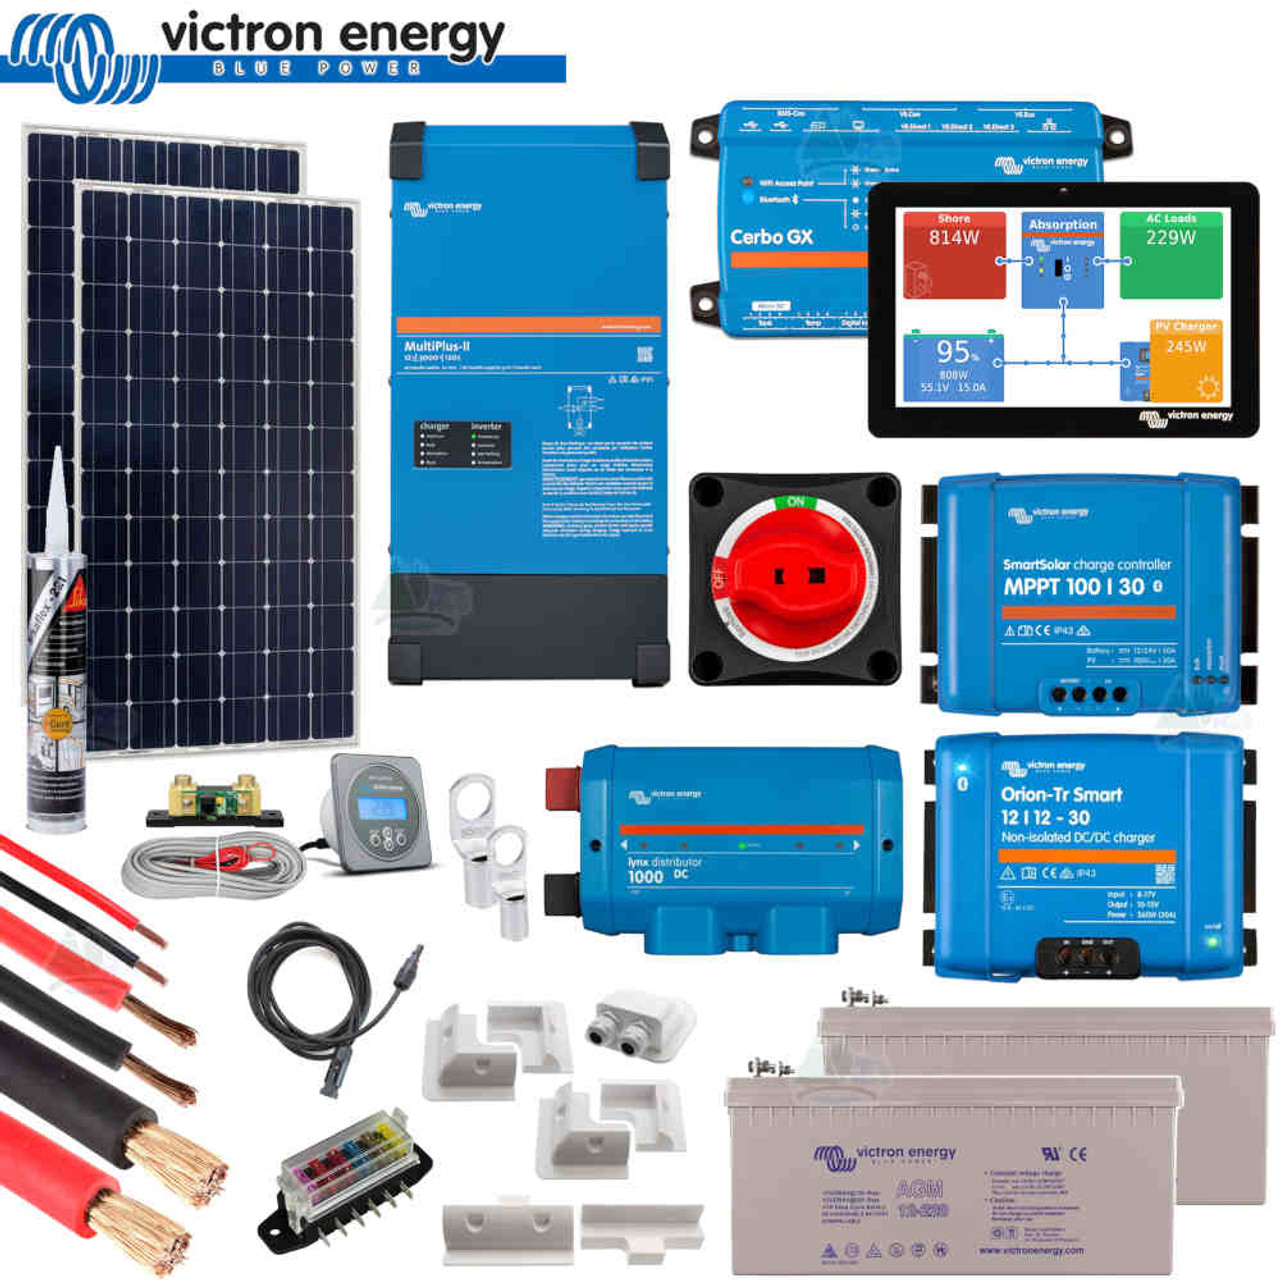 Victron 350 Watt Solar Panel Kit with MPPT Controller, Multiplus